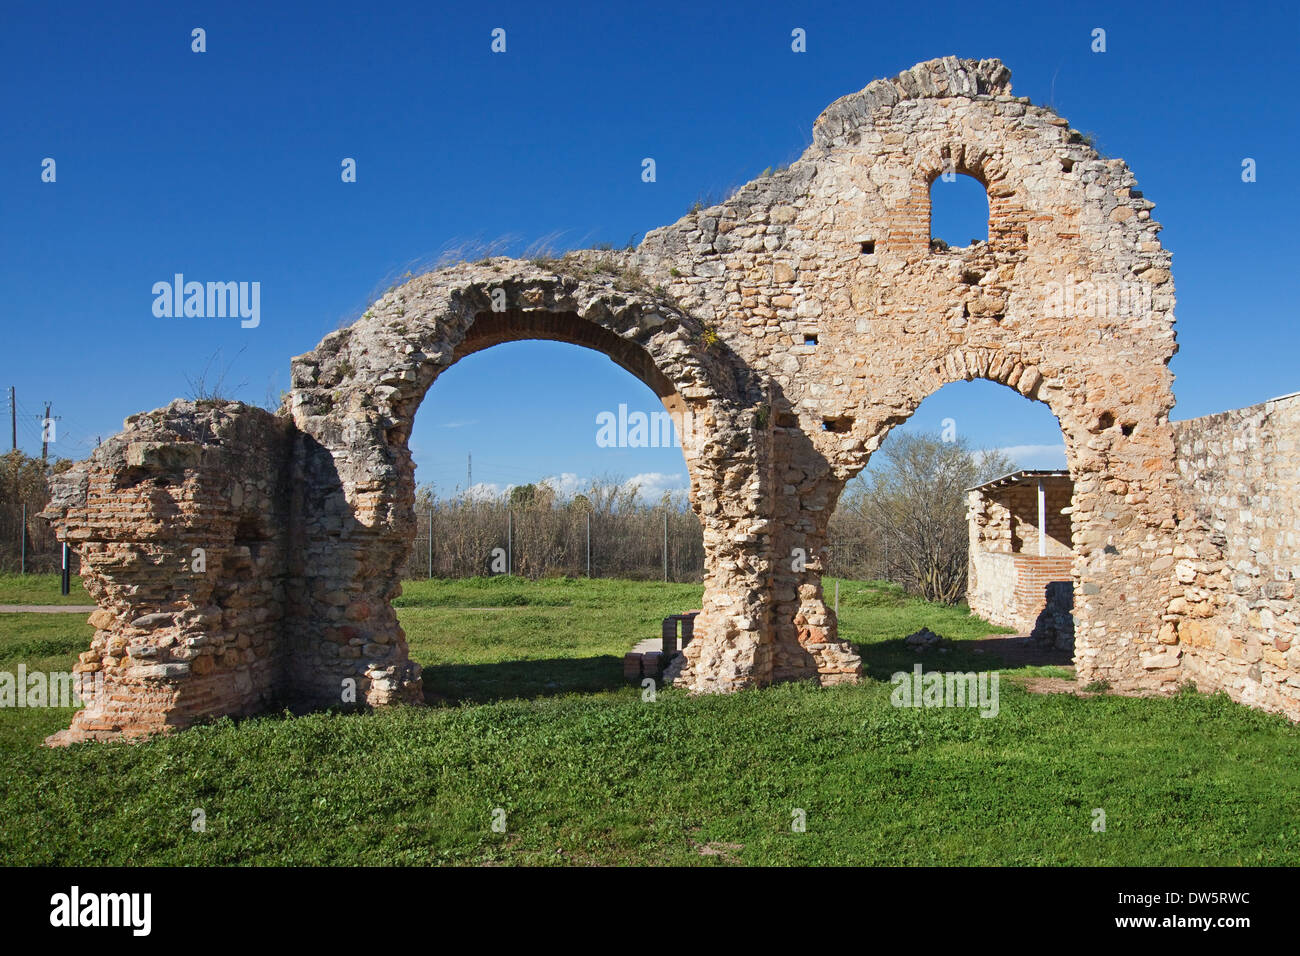 Ruins of the roman baths of the villa of Centcelles, Tarragona province, Spain. Stock Photo